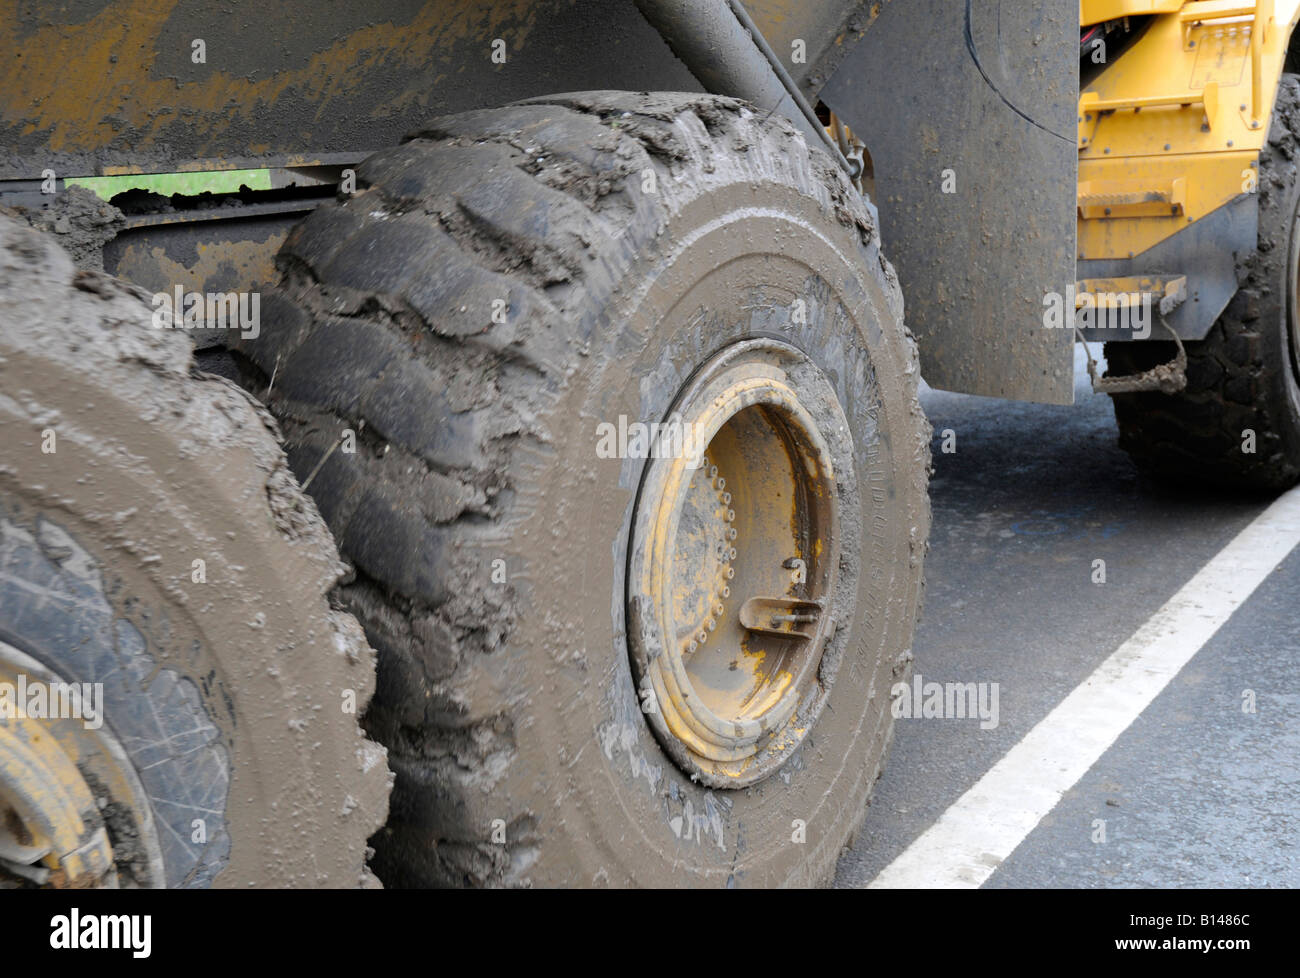 Dumper Truck Wheels, UK construction site Stock Photo